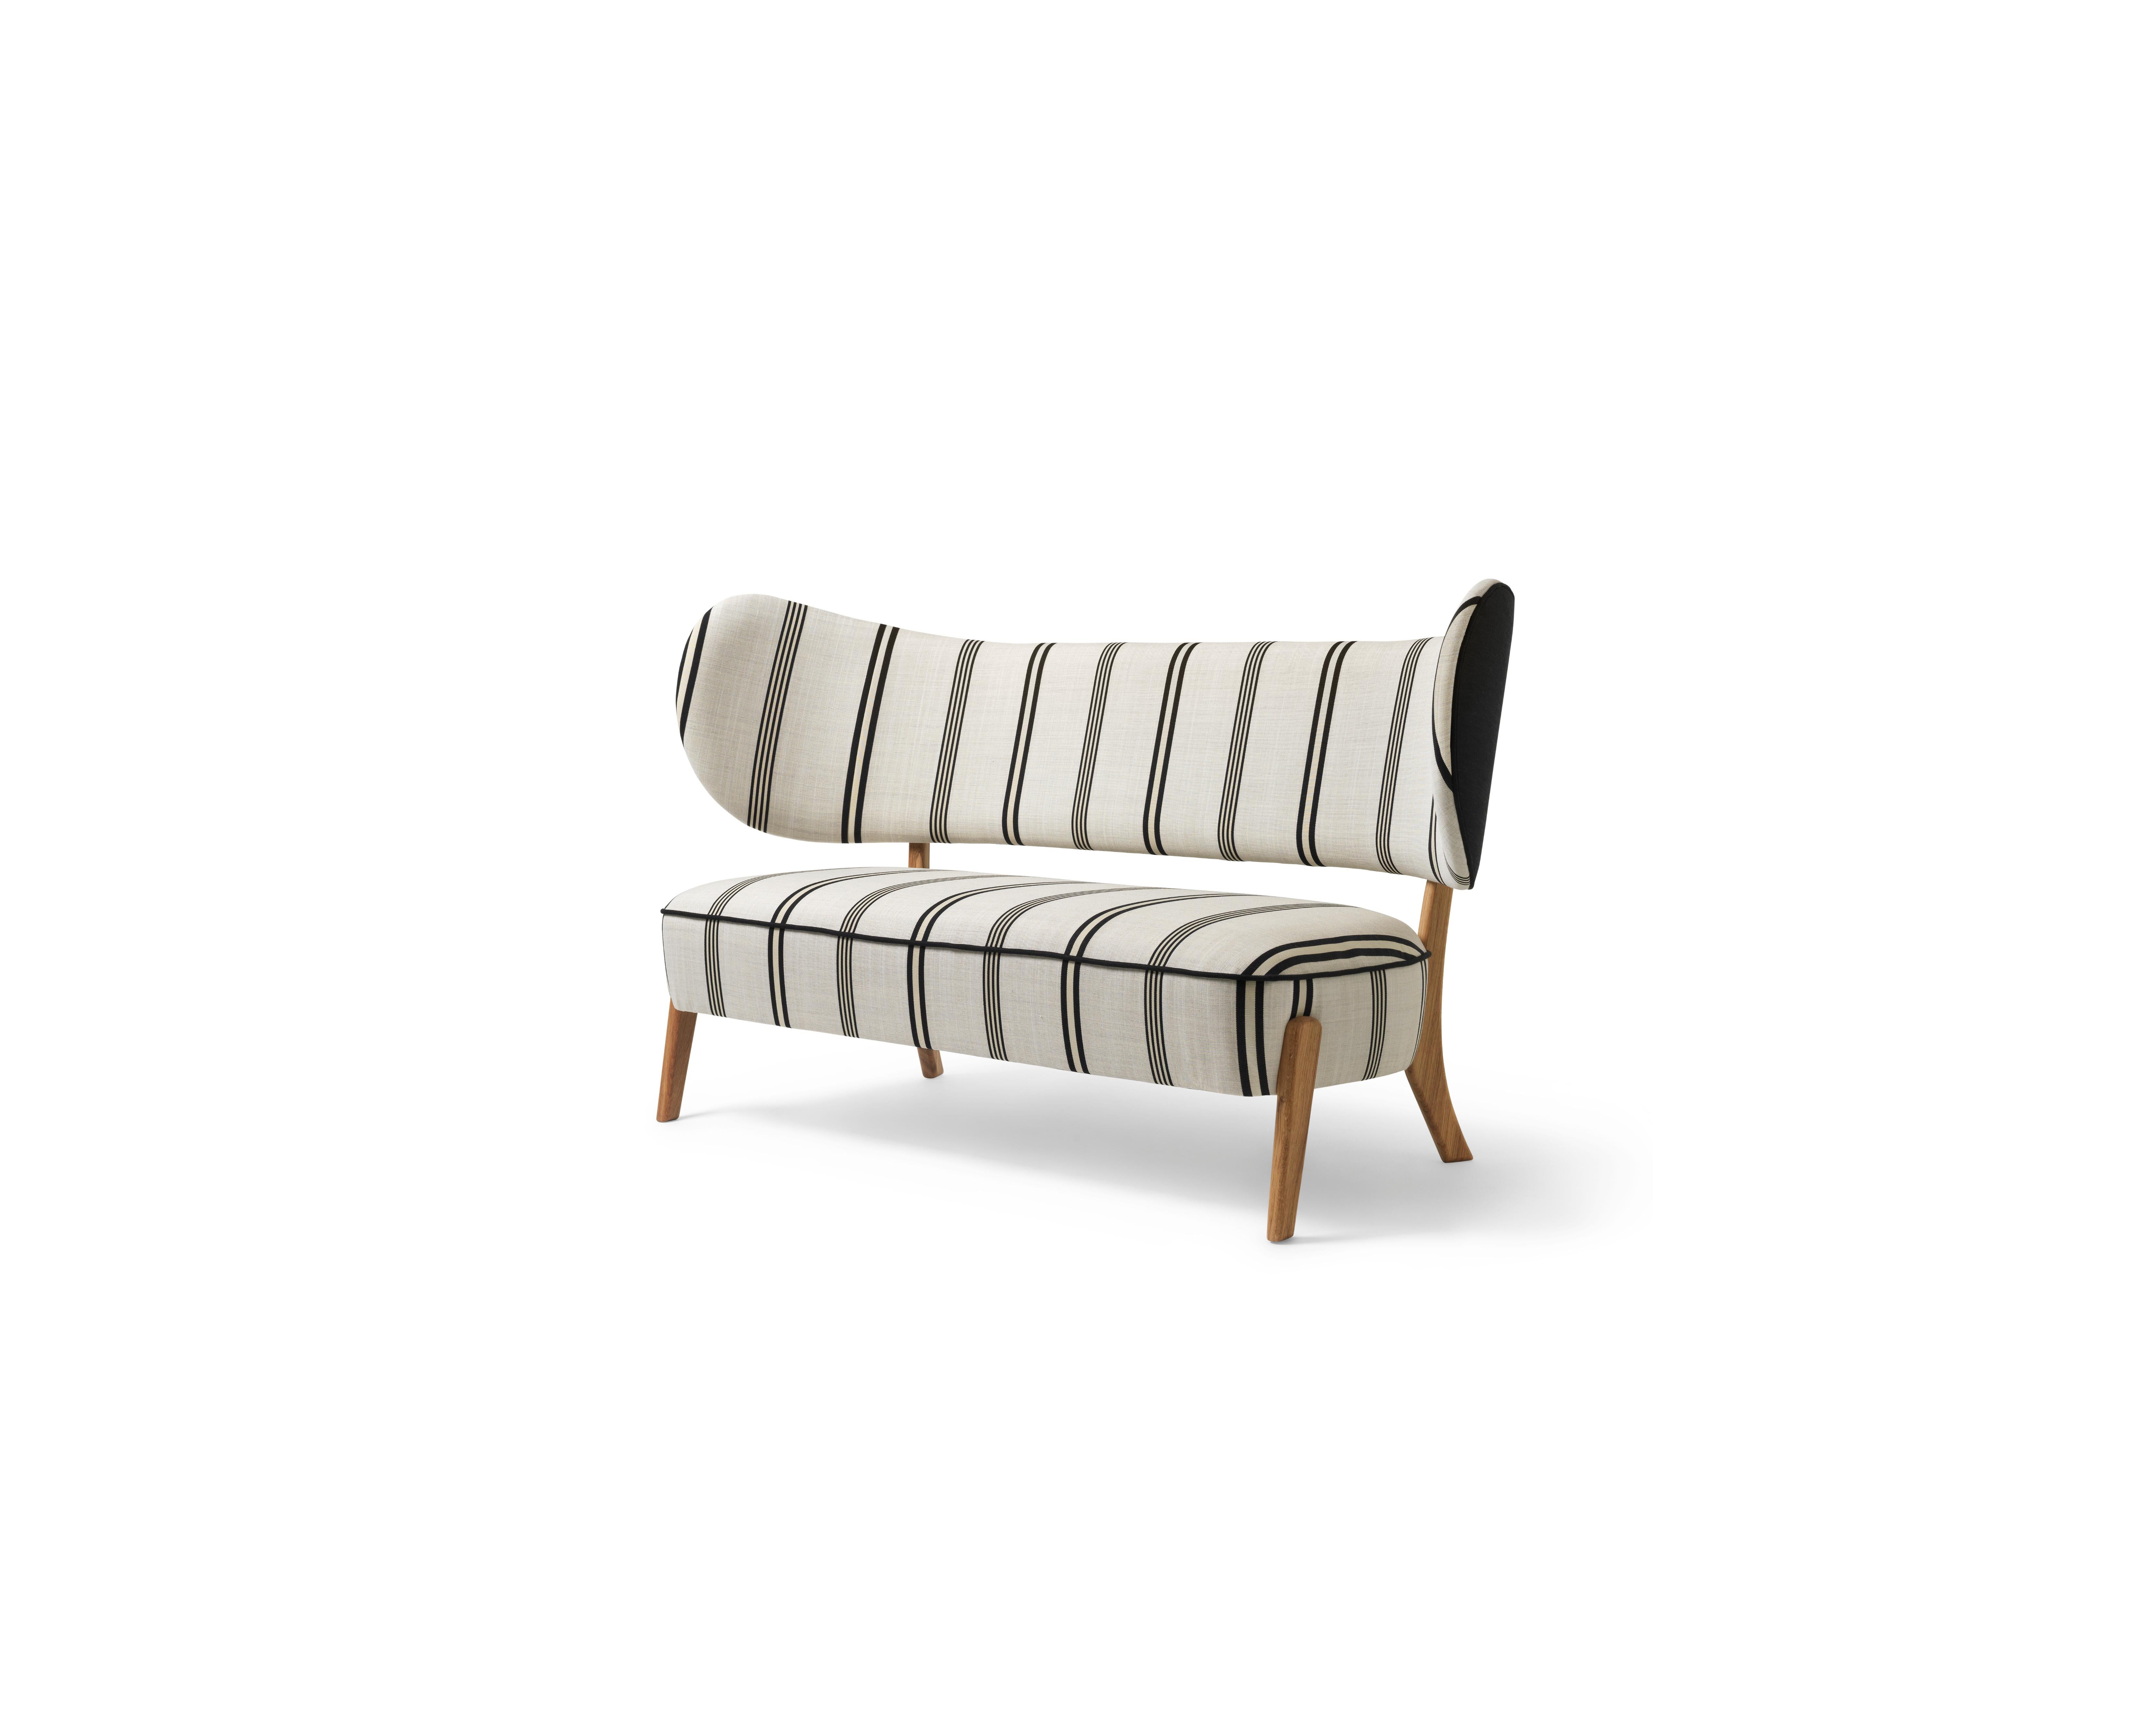 Dedar / Linear TMBO lounge sofa by Mazo Design
Dimensions: W 165 x D 68.5 x H 87 cm
Materials: Oak
Also available: ROMO/Linara, DAW/Royal, KVADRAT/Remix, KVADRAT/Hallingdal & Fiord, BUTE/Storr, DAW/Mohair & Mcnutt, JENNIFER SHORTO / Kongaline &